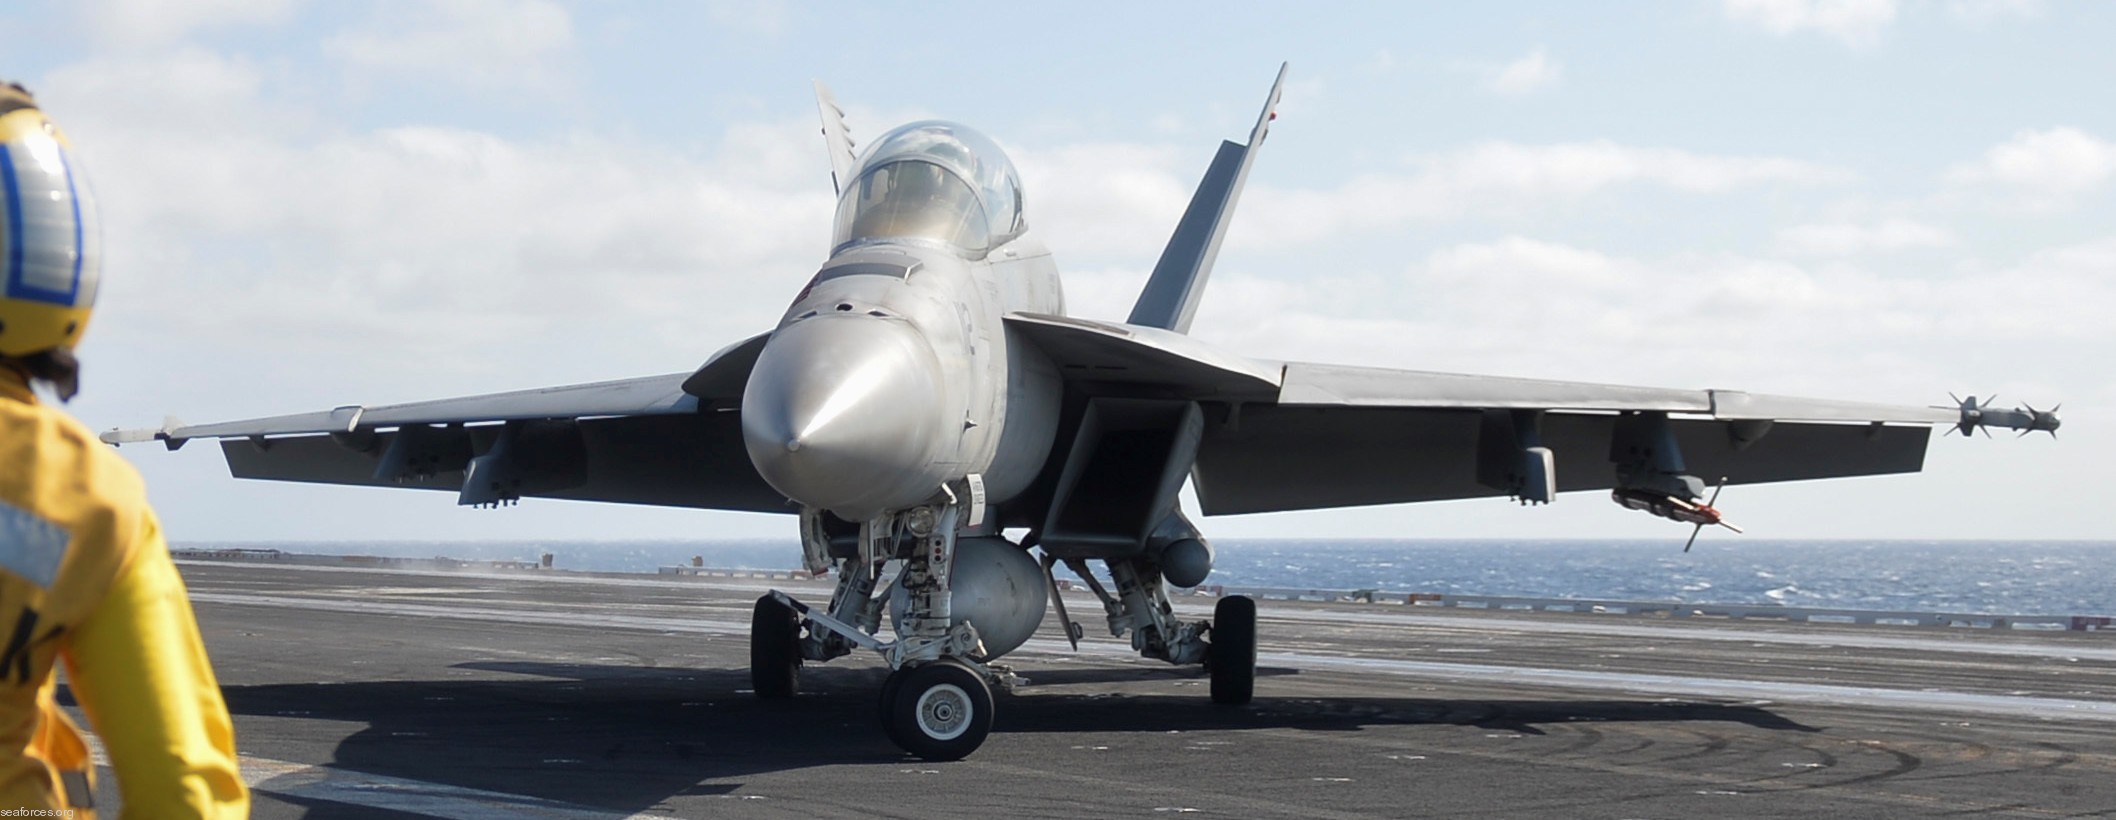 vfa-154 black knights strike fighter squadron navy f/a-18f super hornet carrier air wing cvw-11 uss nimitz cvn-68 10